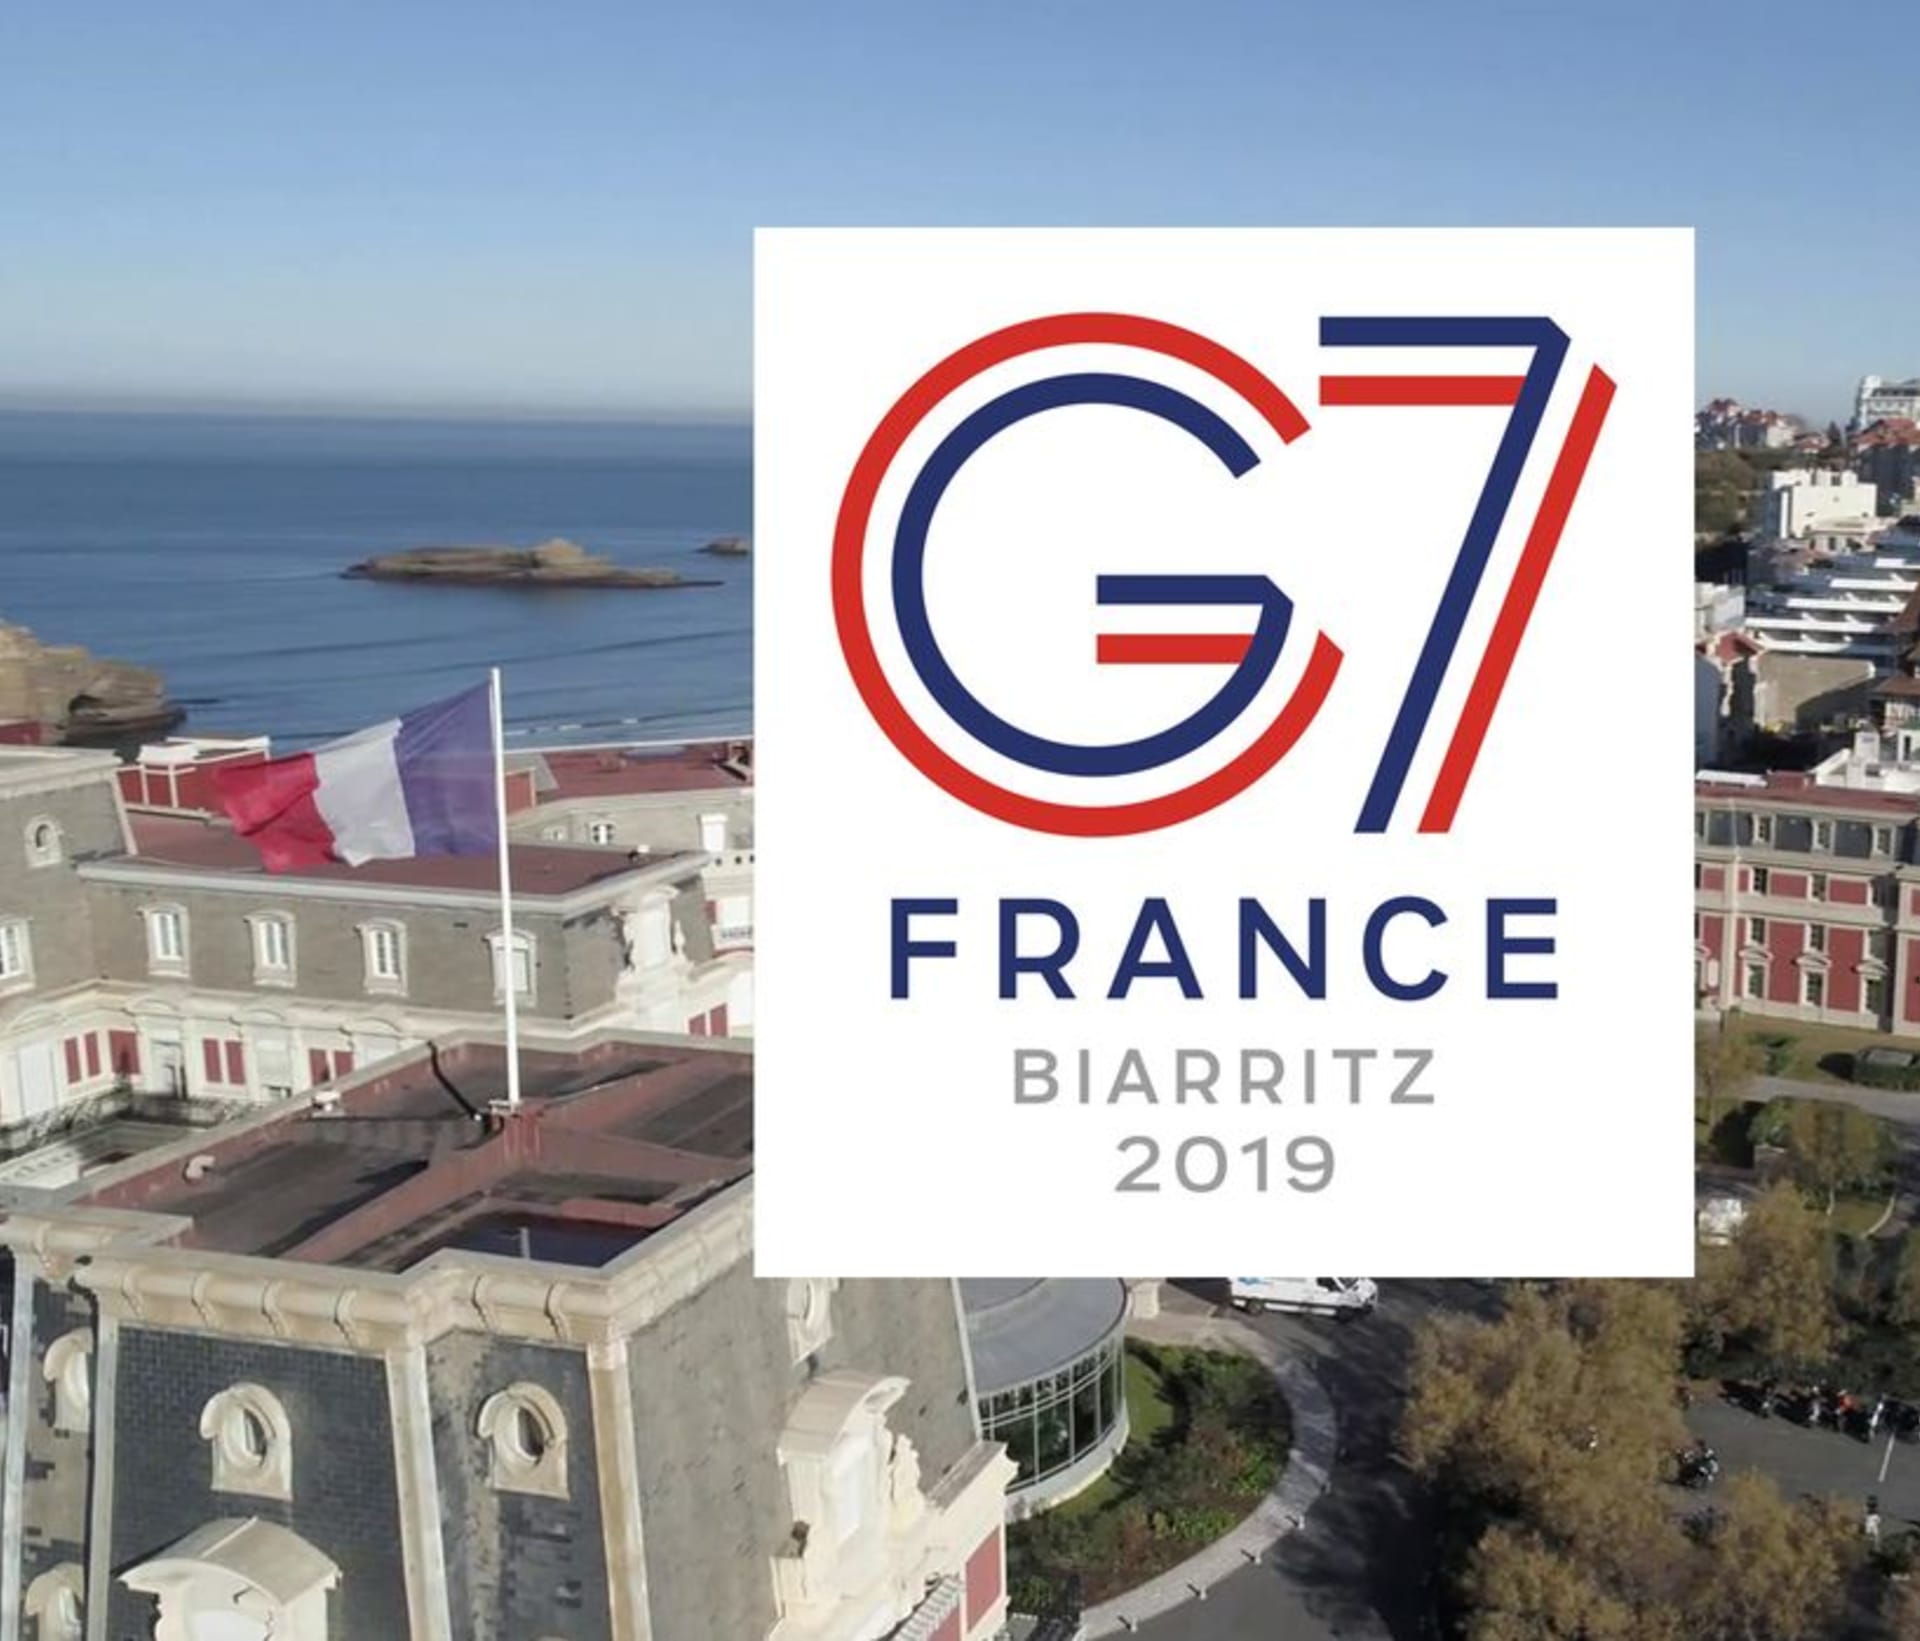 G7-Francie